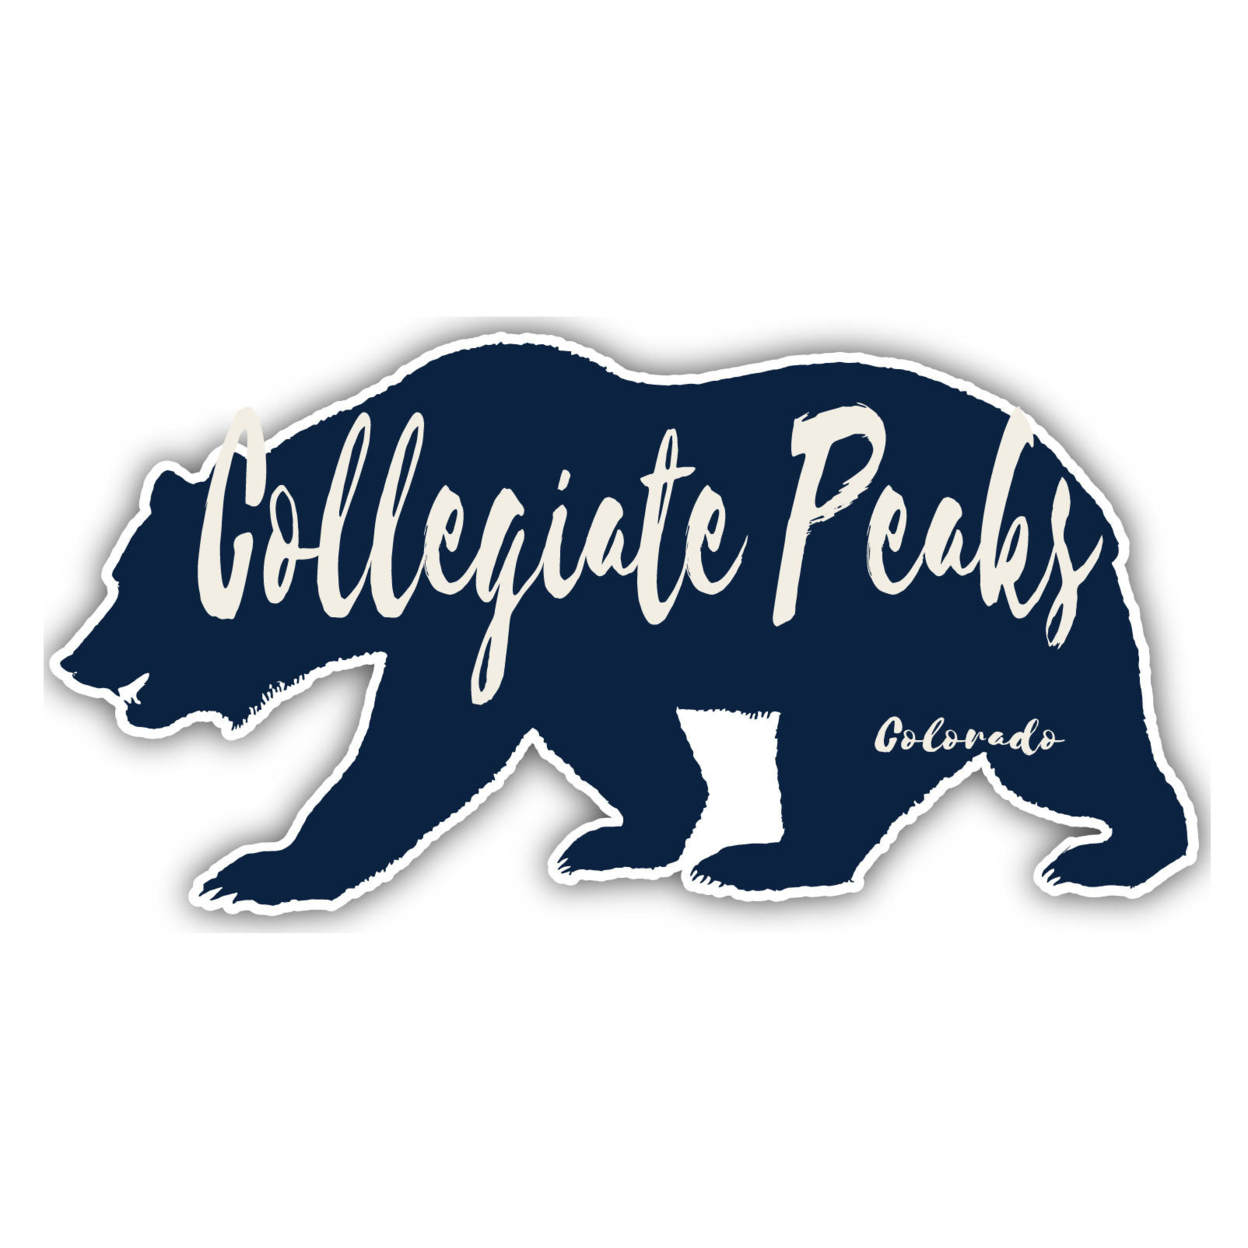 Collegiate Peaks Colorado Souvenir Decorative Stickers (Choose Theme And Size) - 4-Pack, 4-Inch, Bear